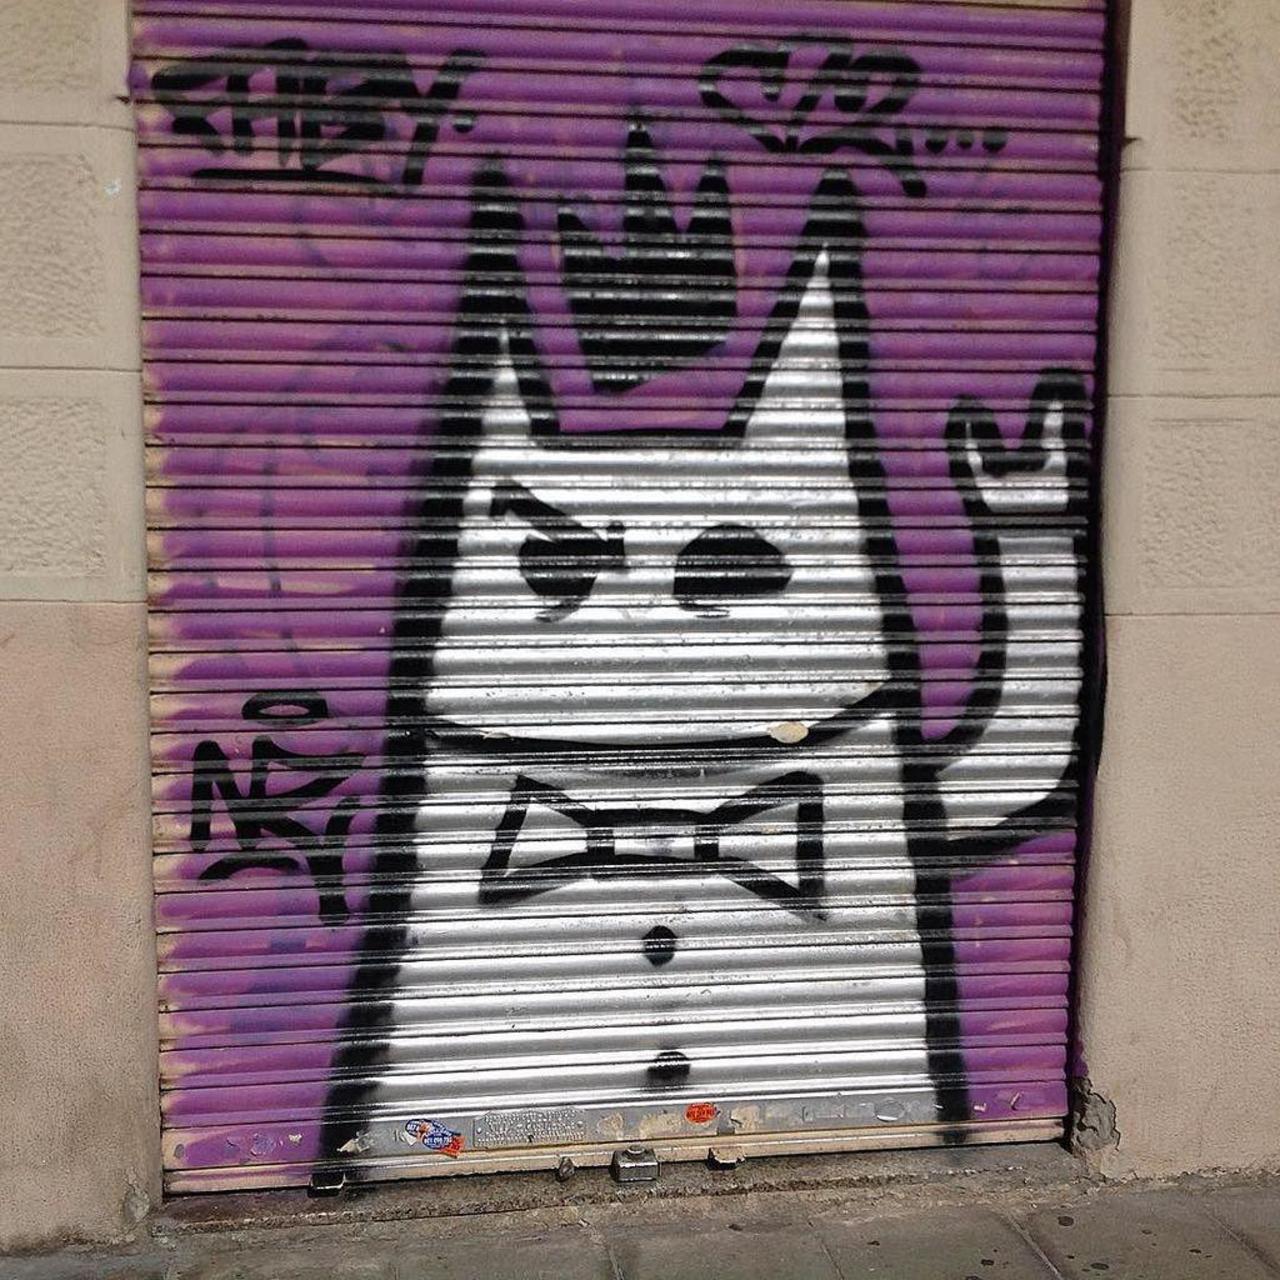 Bye bye #barcelona #street #streetart #streetartbarcelona #graff #graffiti #wallart #spray… http://ift.tt/1OACrYb http://t.co/tz79LVrjX9